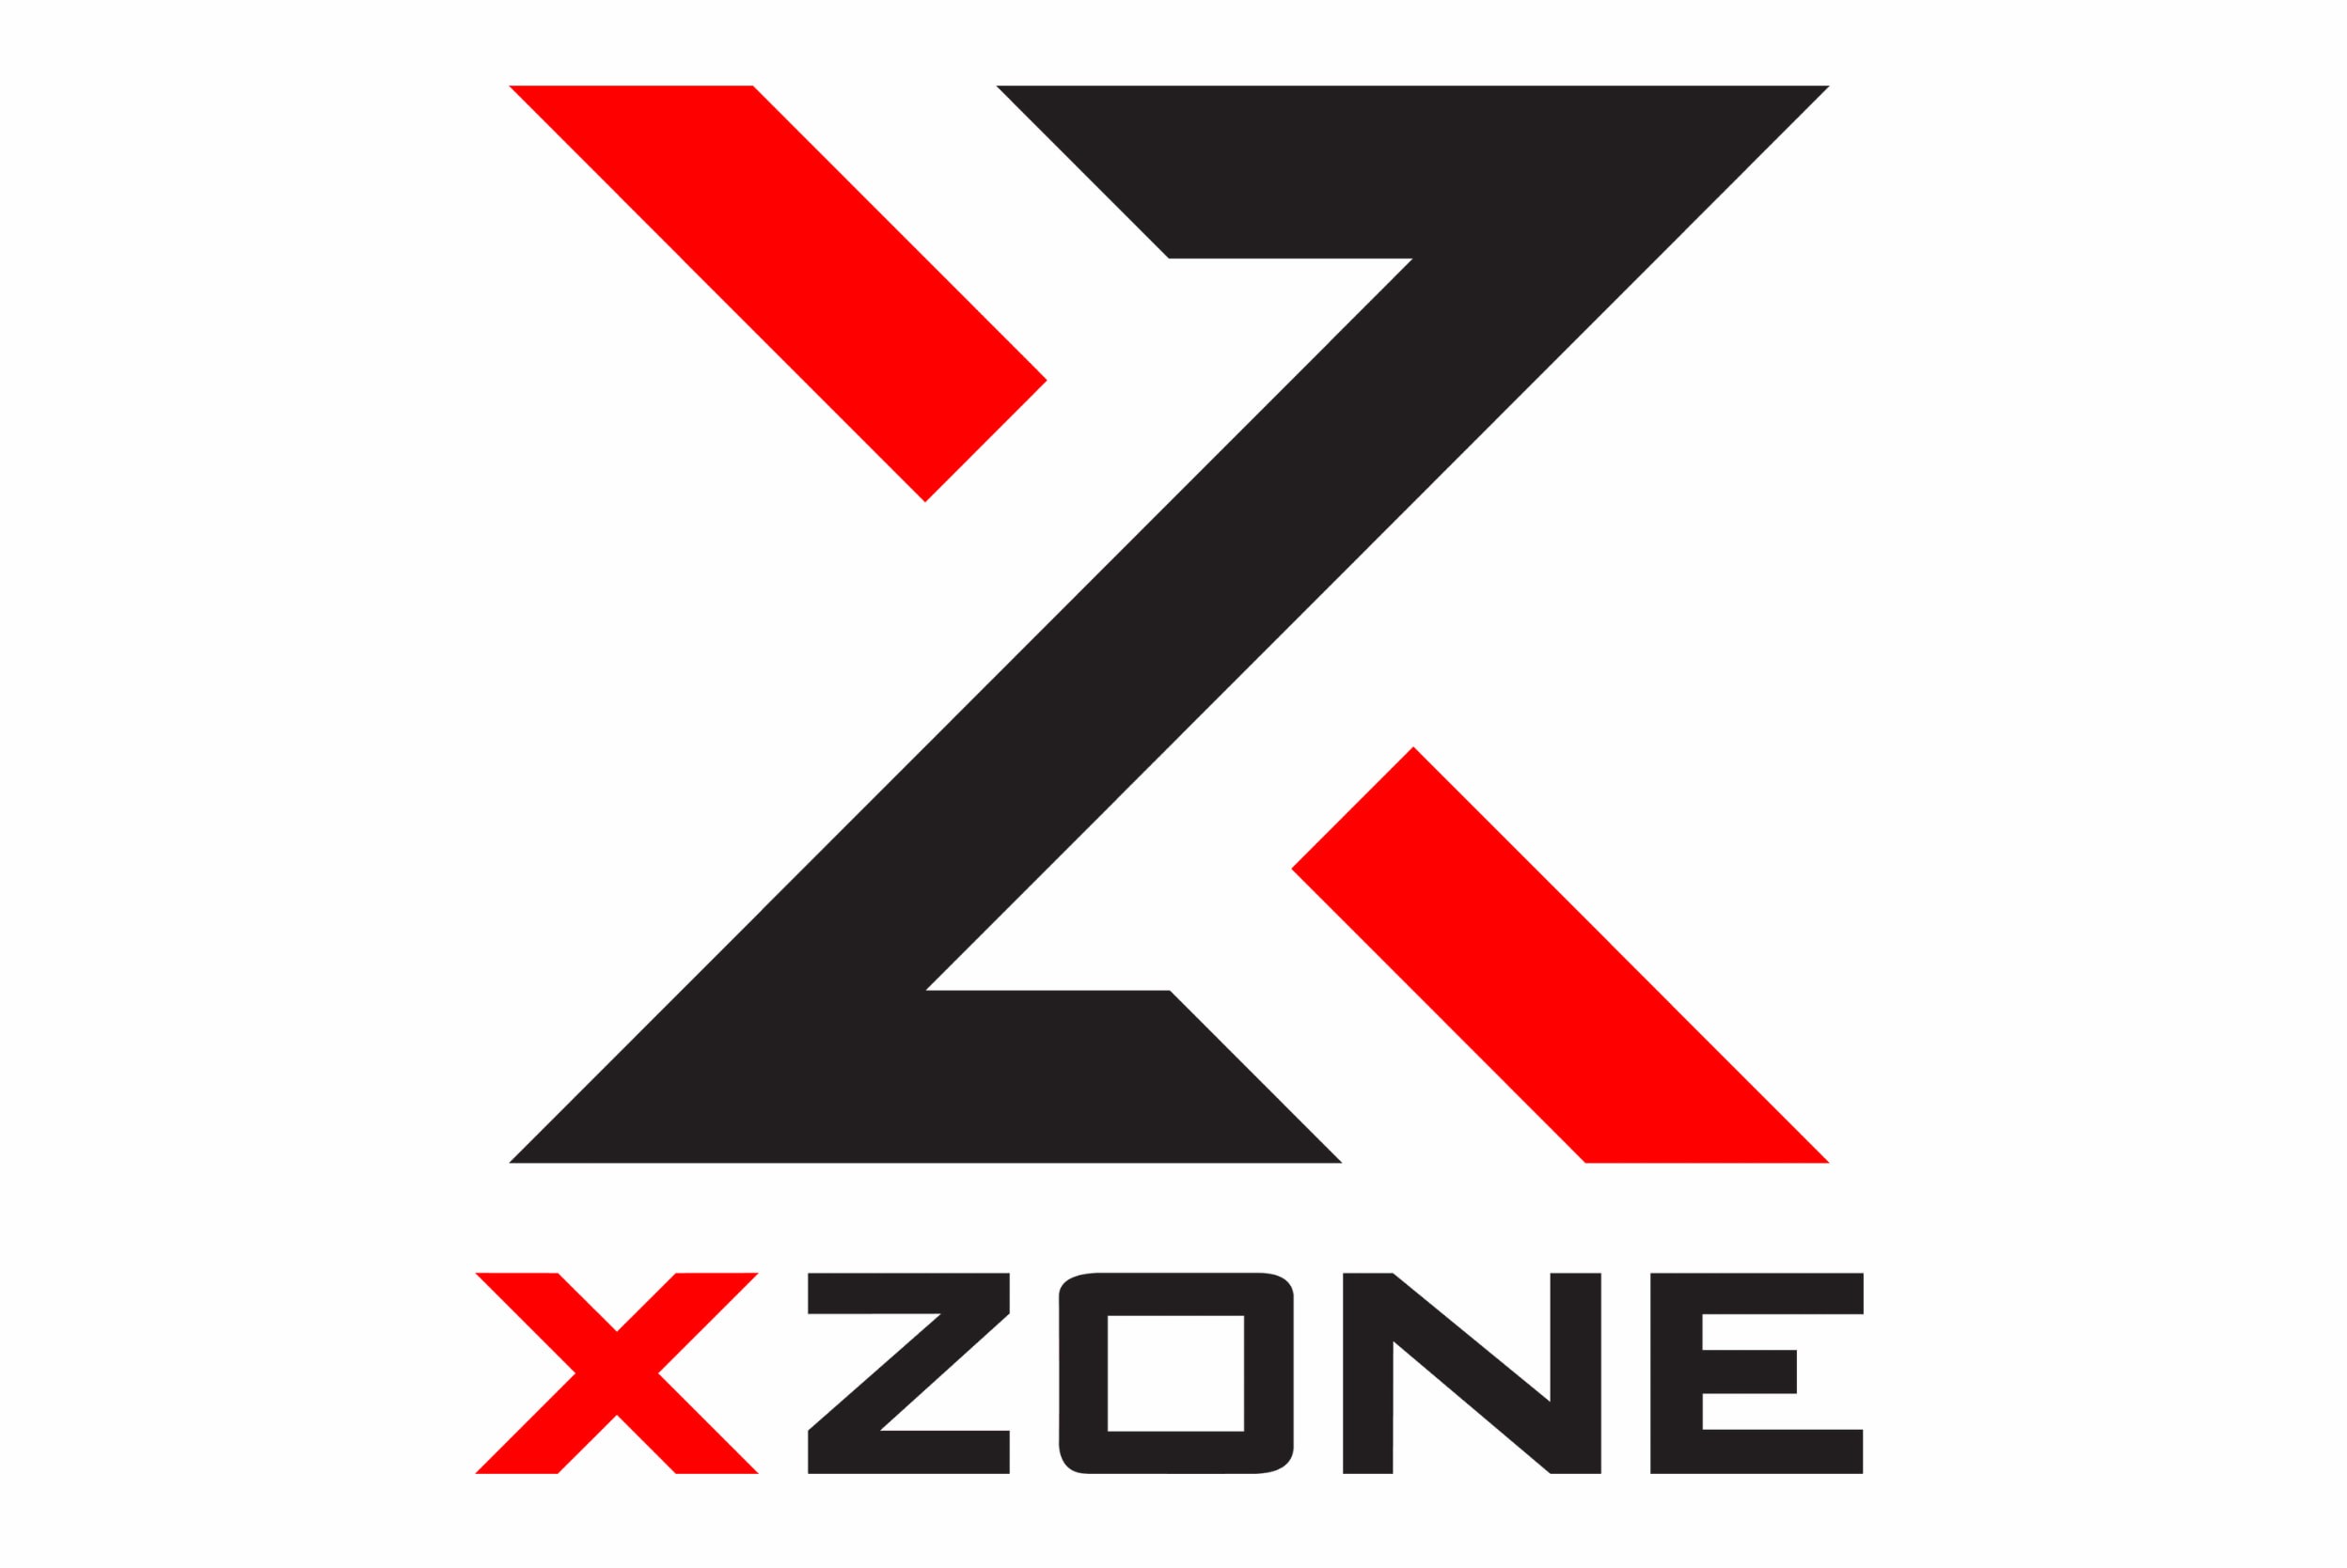 Xzone-logo